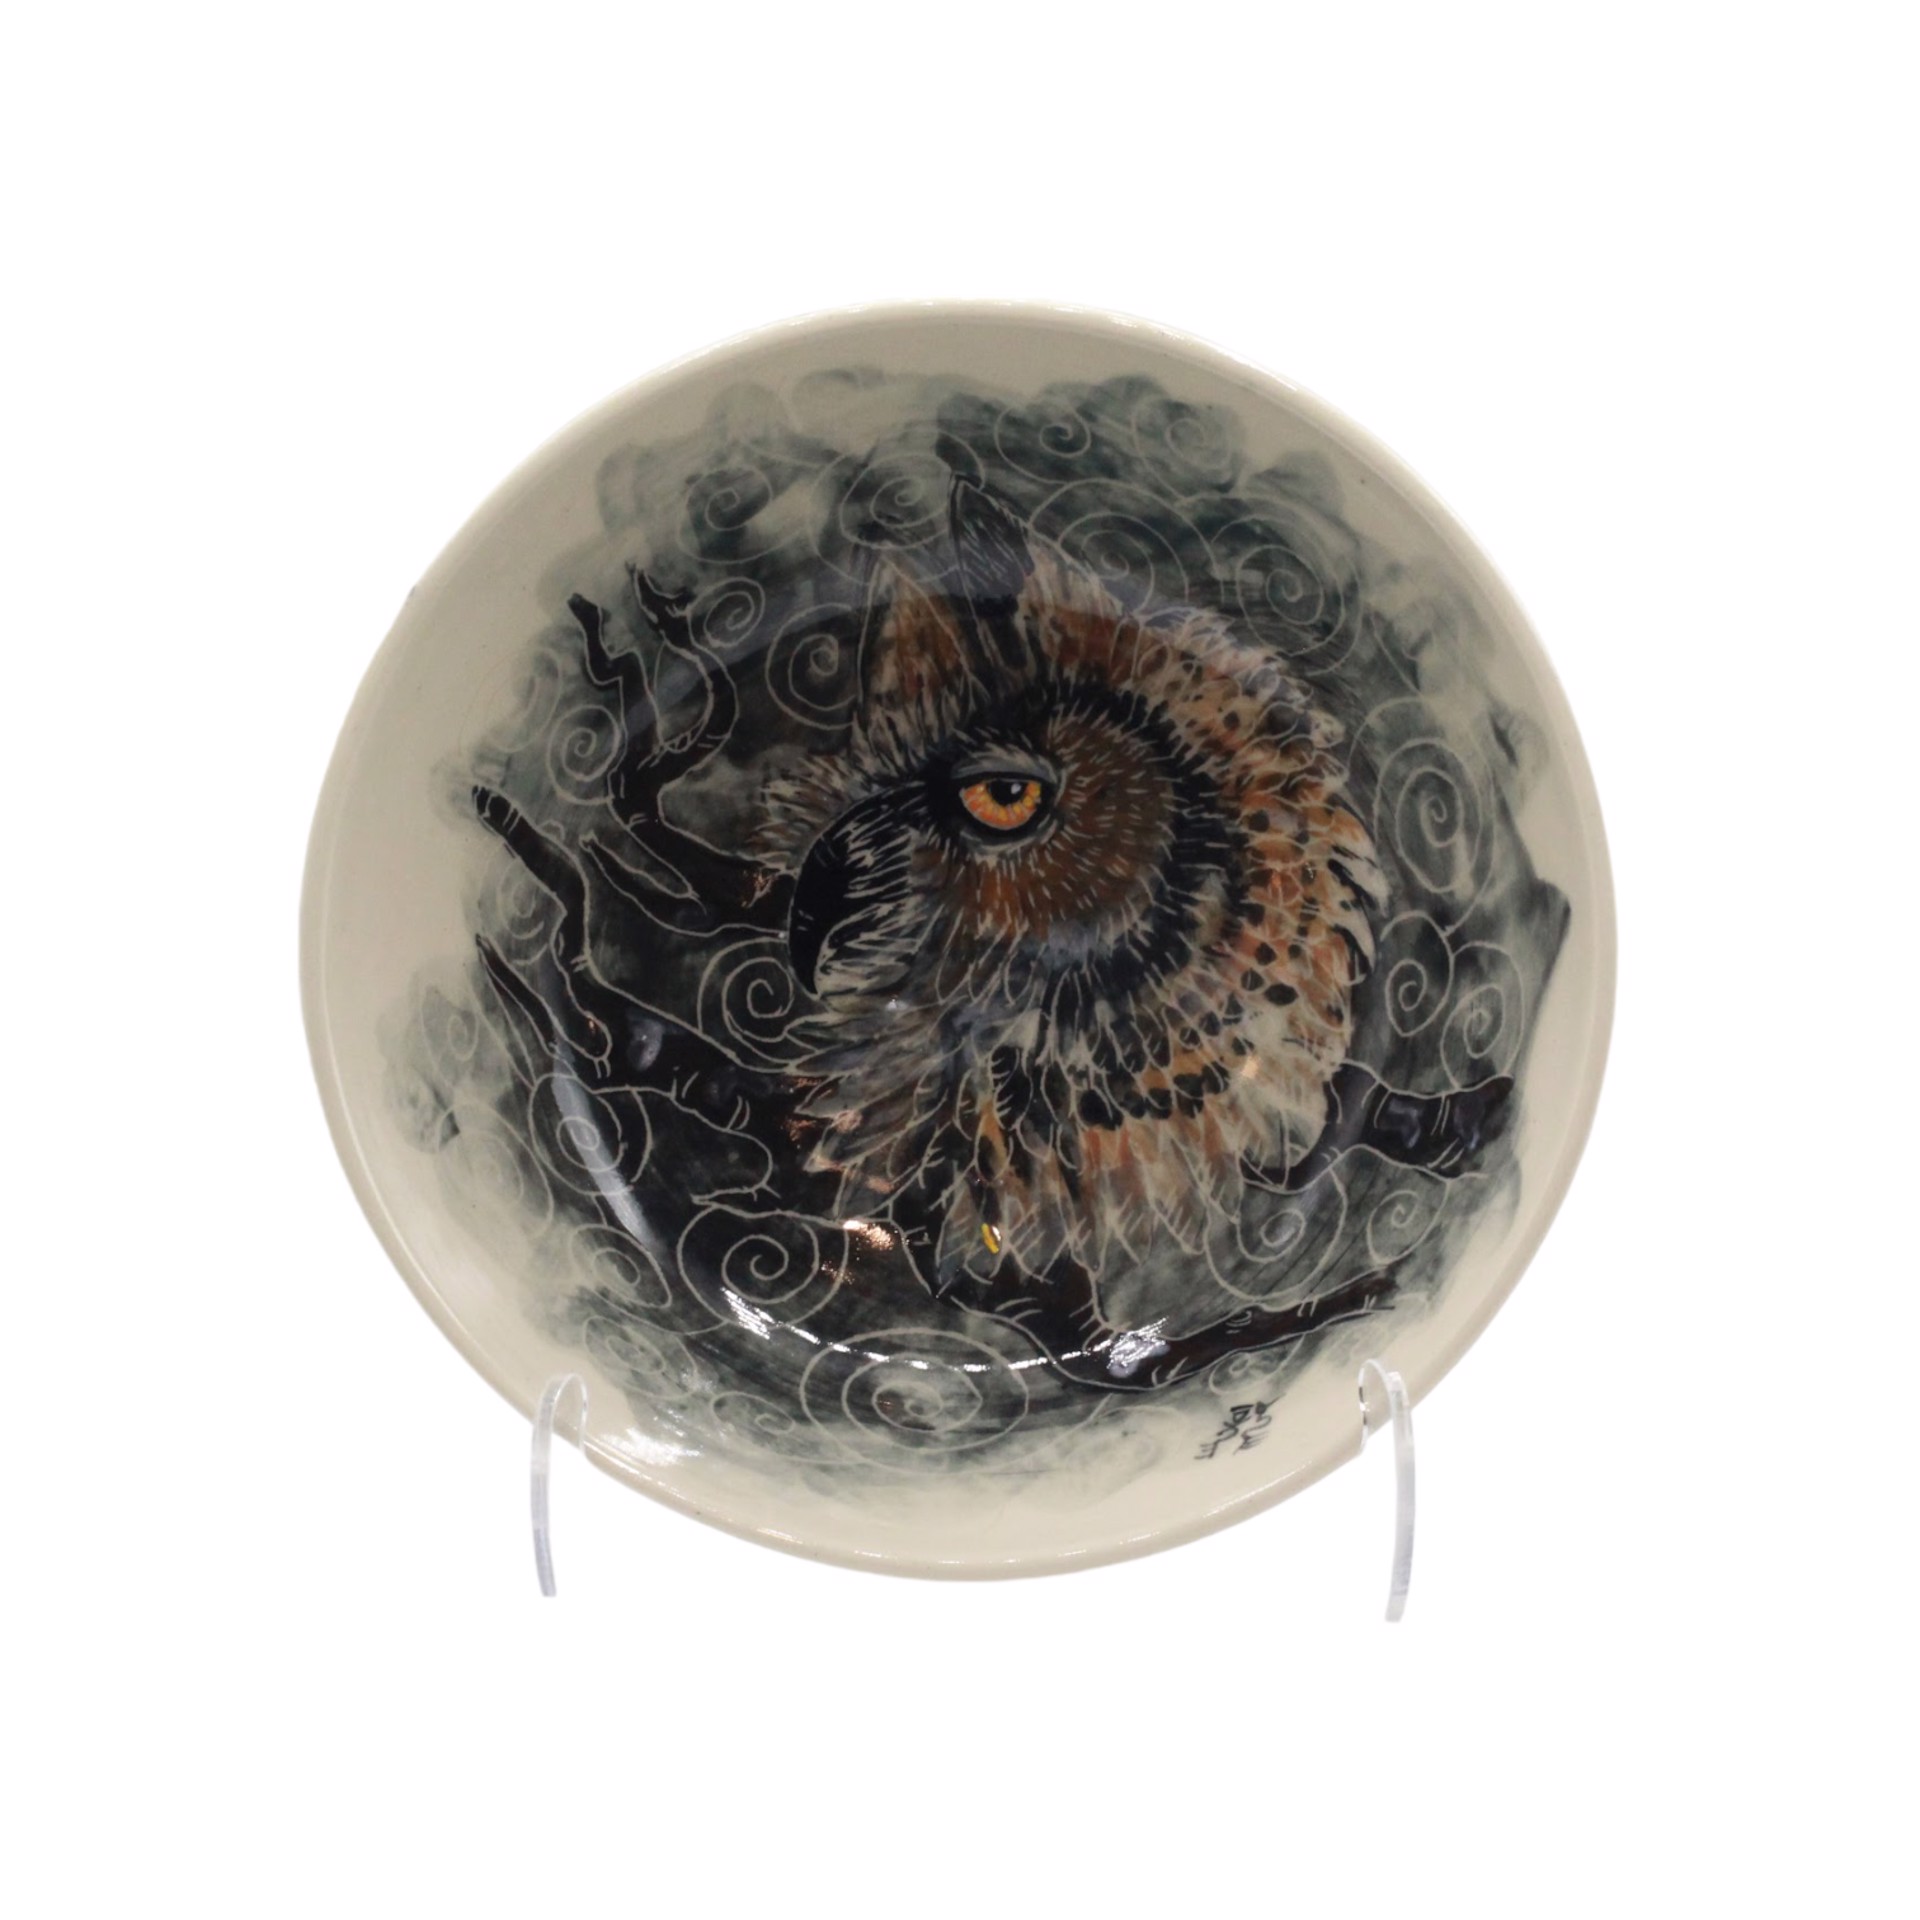 Medium Owl Bowl by Kim Filiaggi & Elizabeth Schowachert